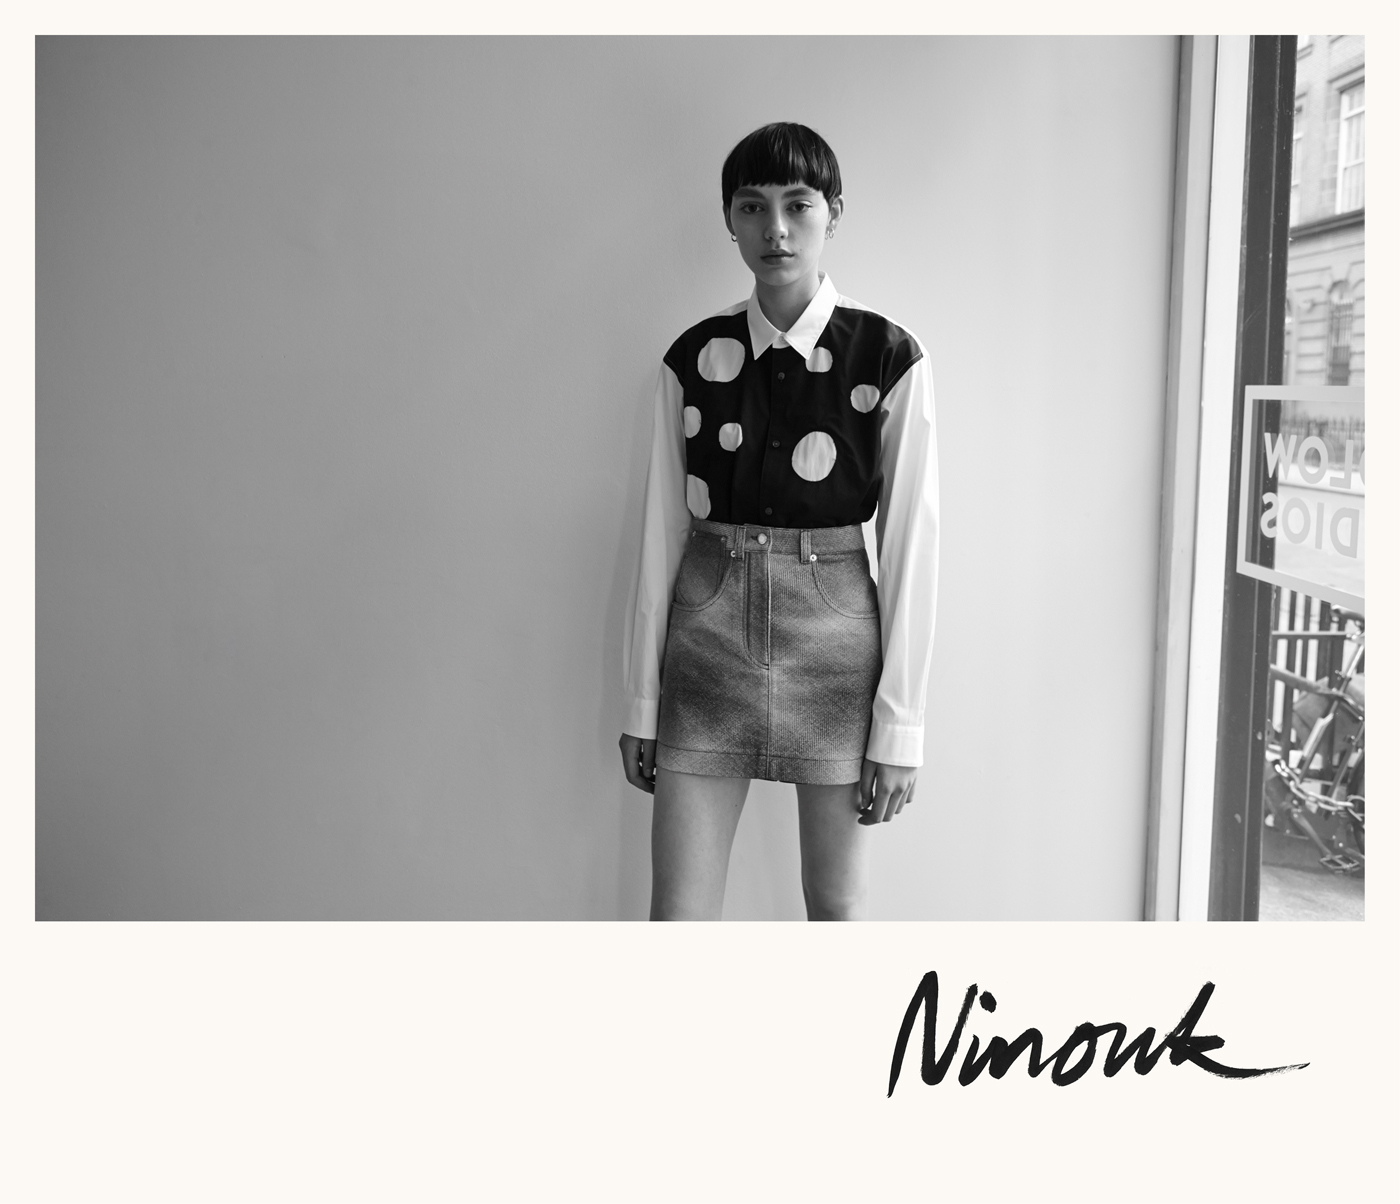 Ninouk Akkerman at Wilhelmina Models wears shirt by Comme des Garçons Shirt. Skirt by Louis Vuitton. Earrings, model's own.